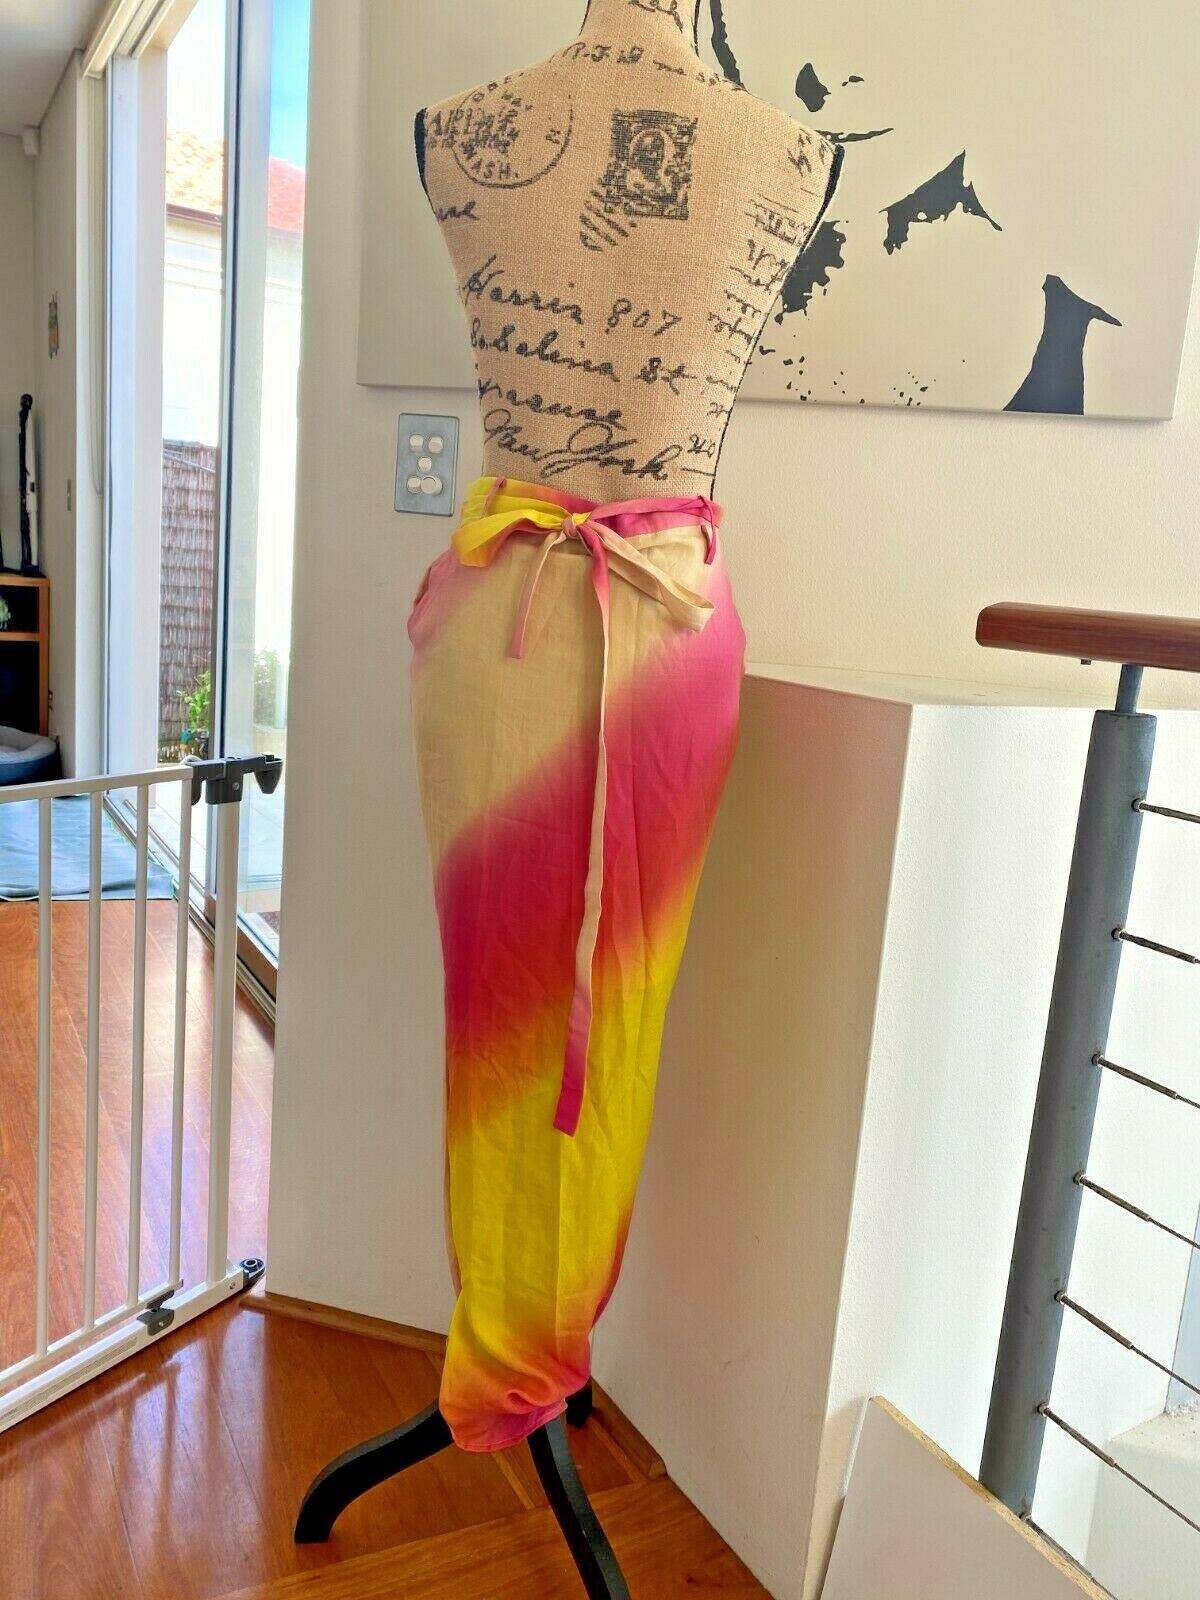 Sass & Bide Sunburst Wrap Skirt | Cotton/Silk Blend Midi, Pink, Yellow